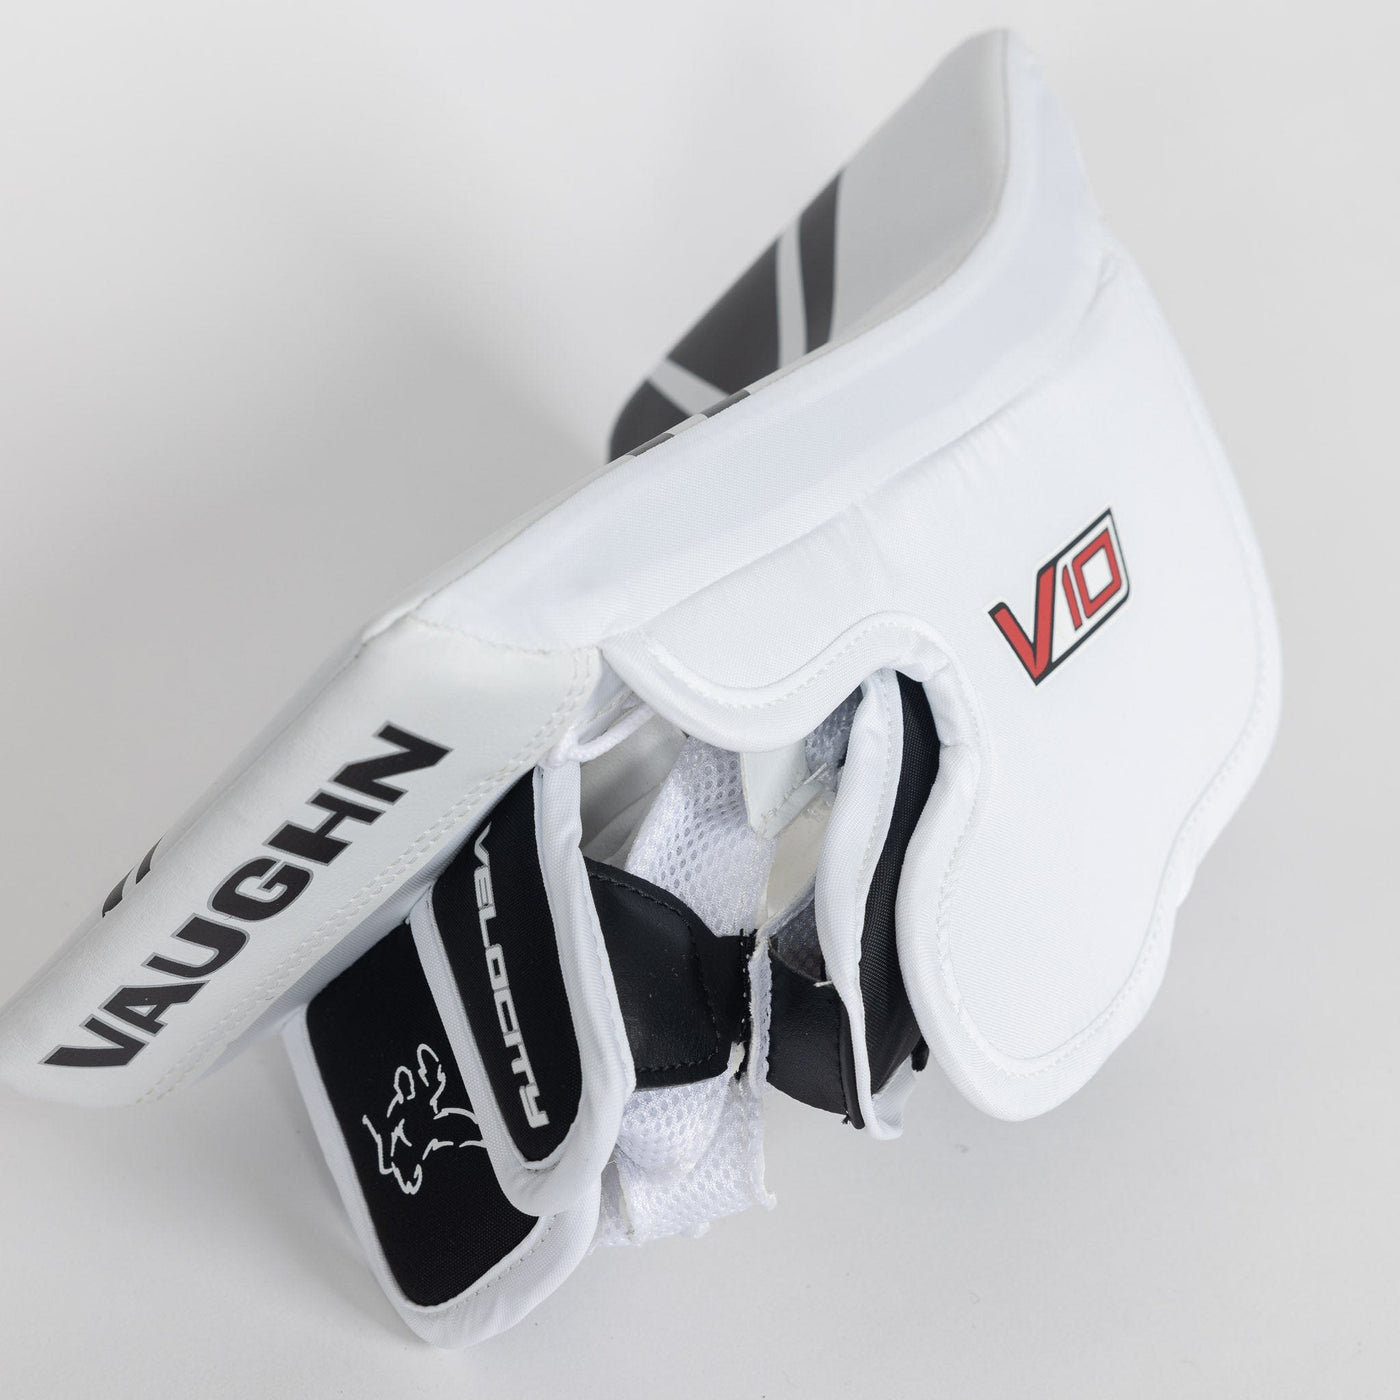 Vaughn Velocity V10 Youth Goalie Blocker - The Hockey Shop Source For Sports